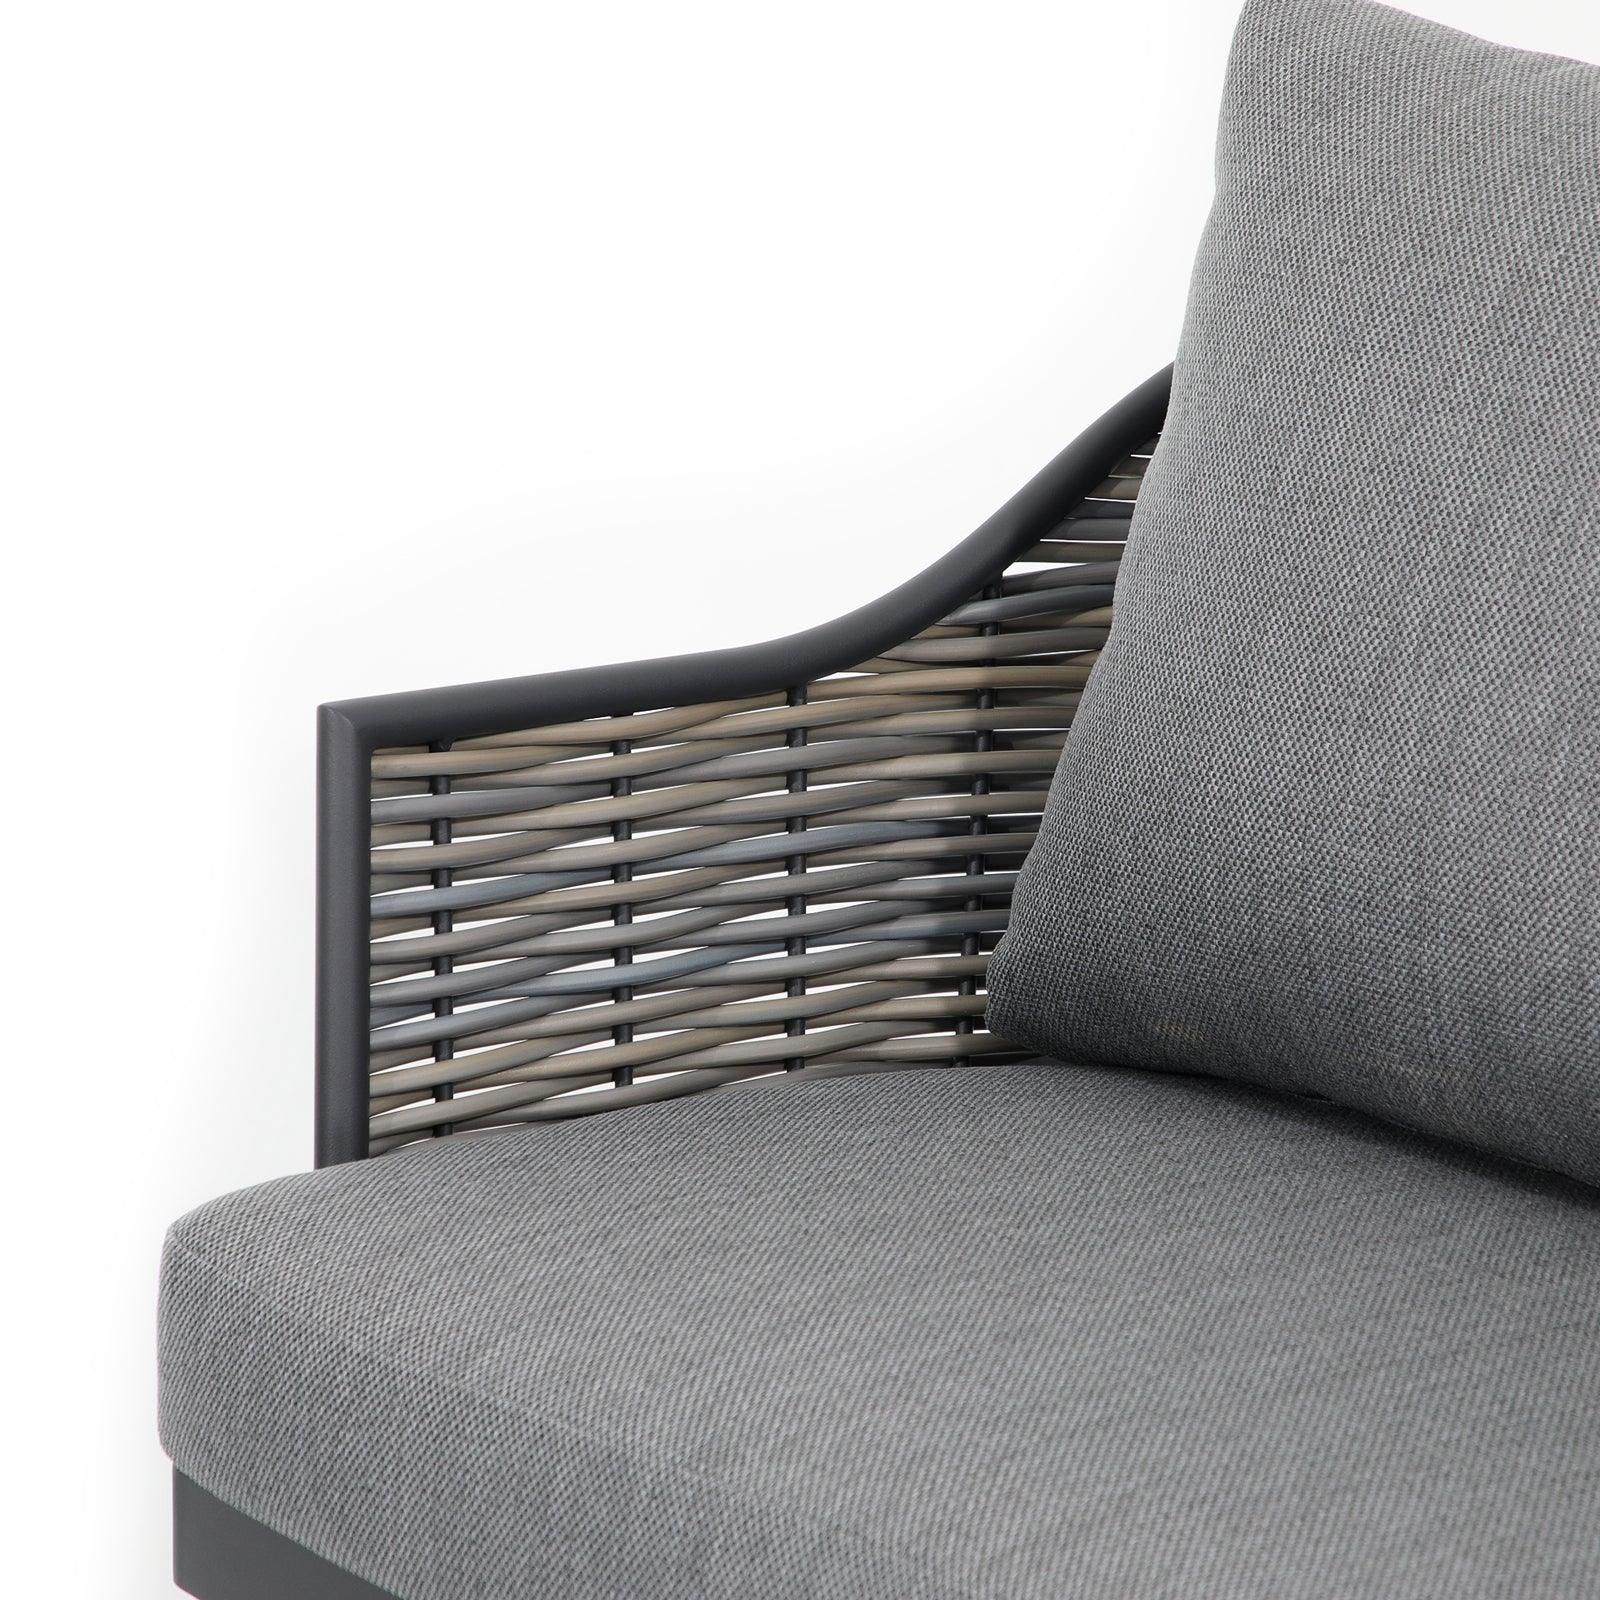 Burano Grey wicker armchair grey cushions detail - Jardina Furniture